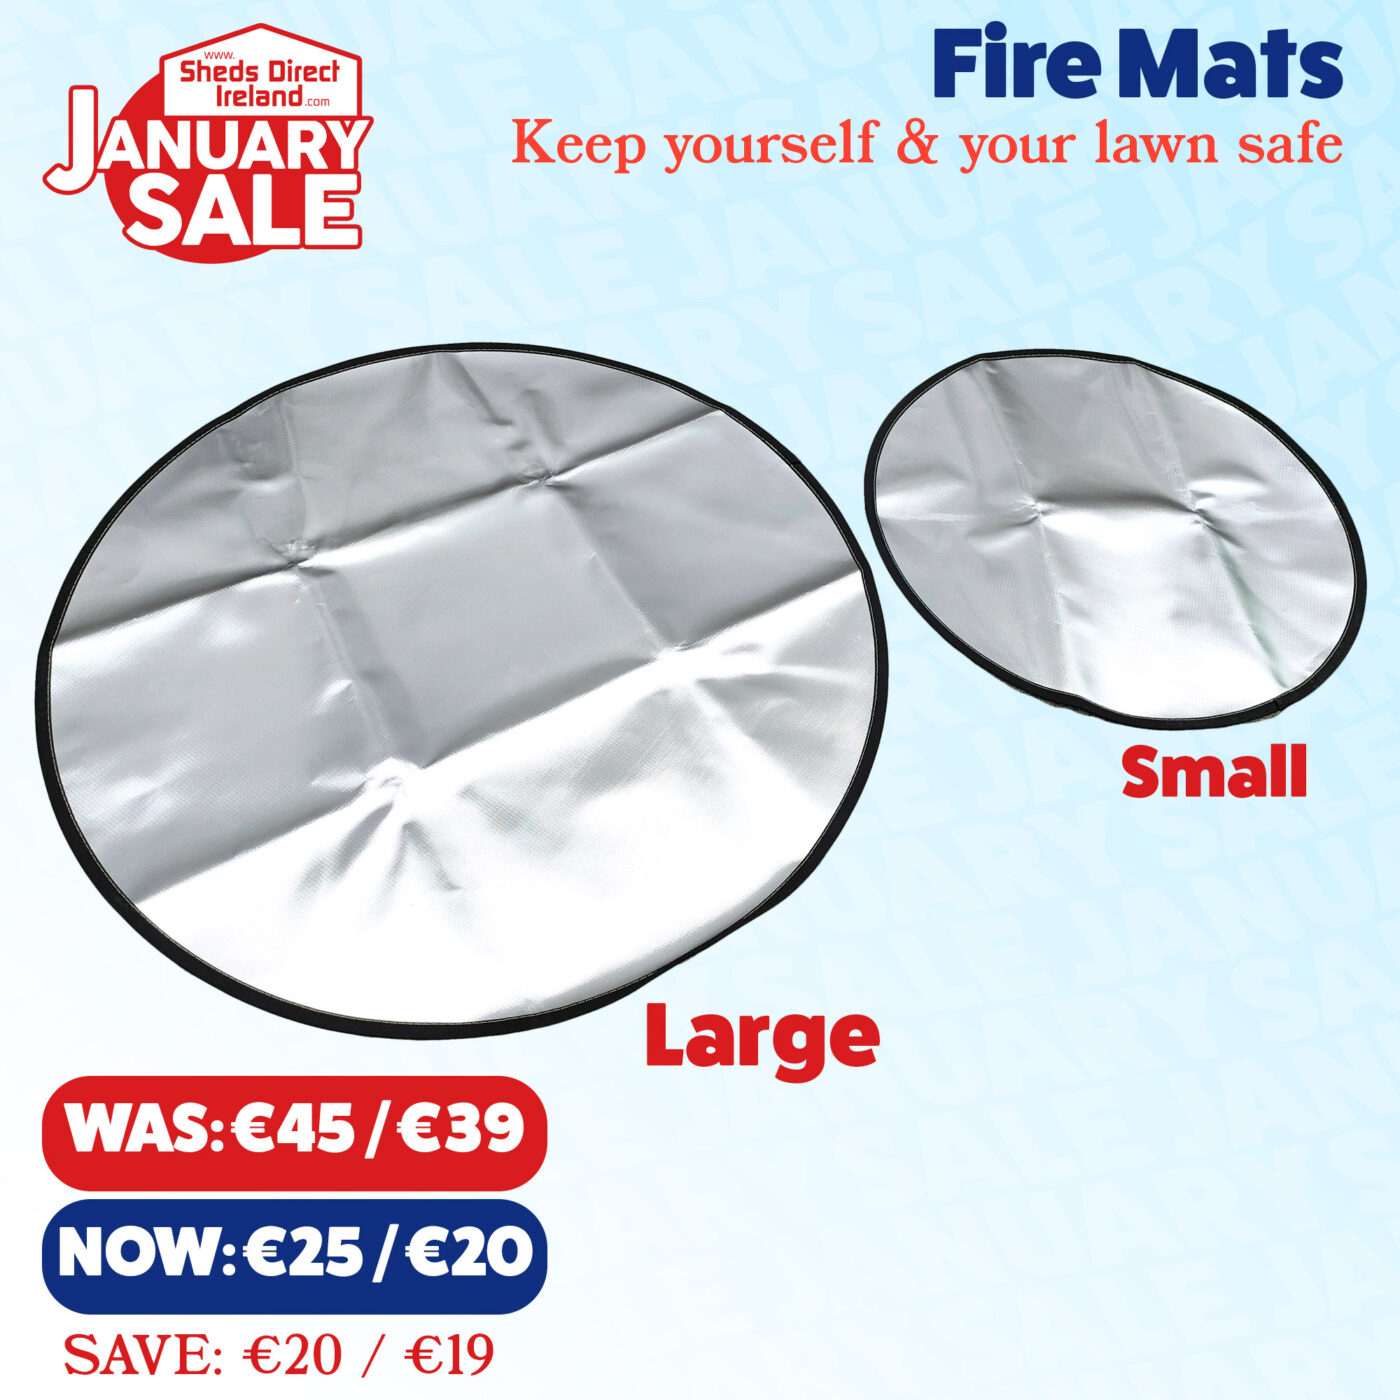 January Sale - fire mats